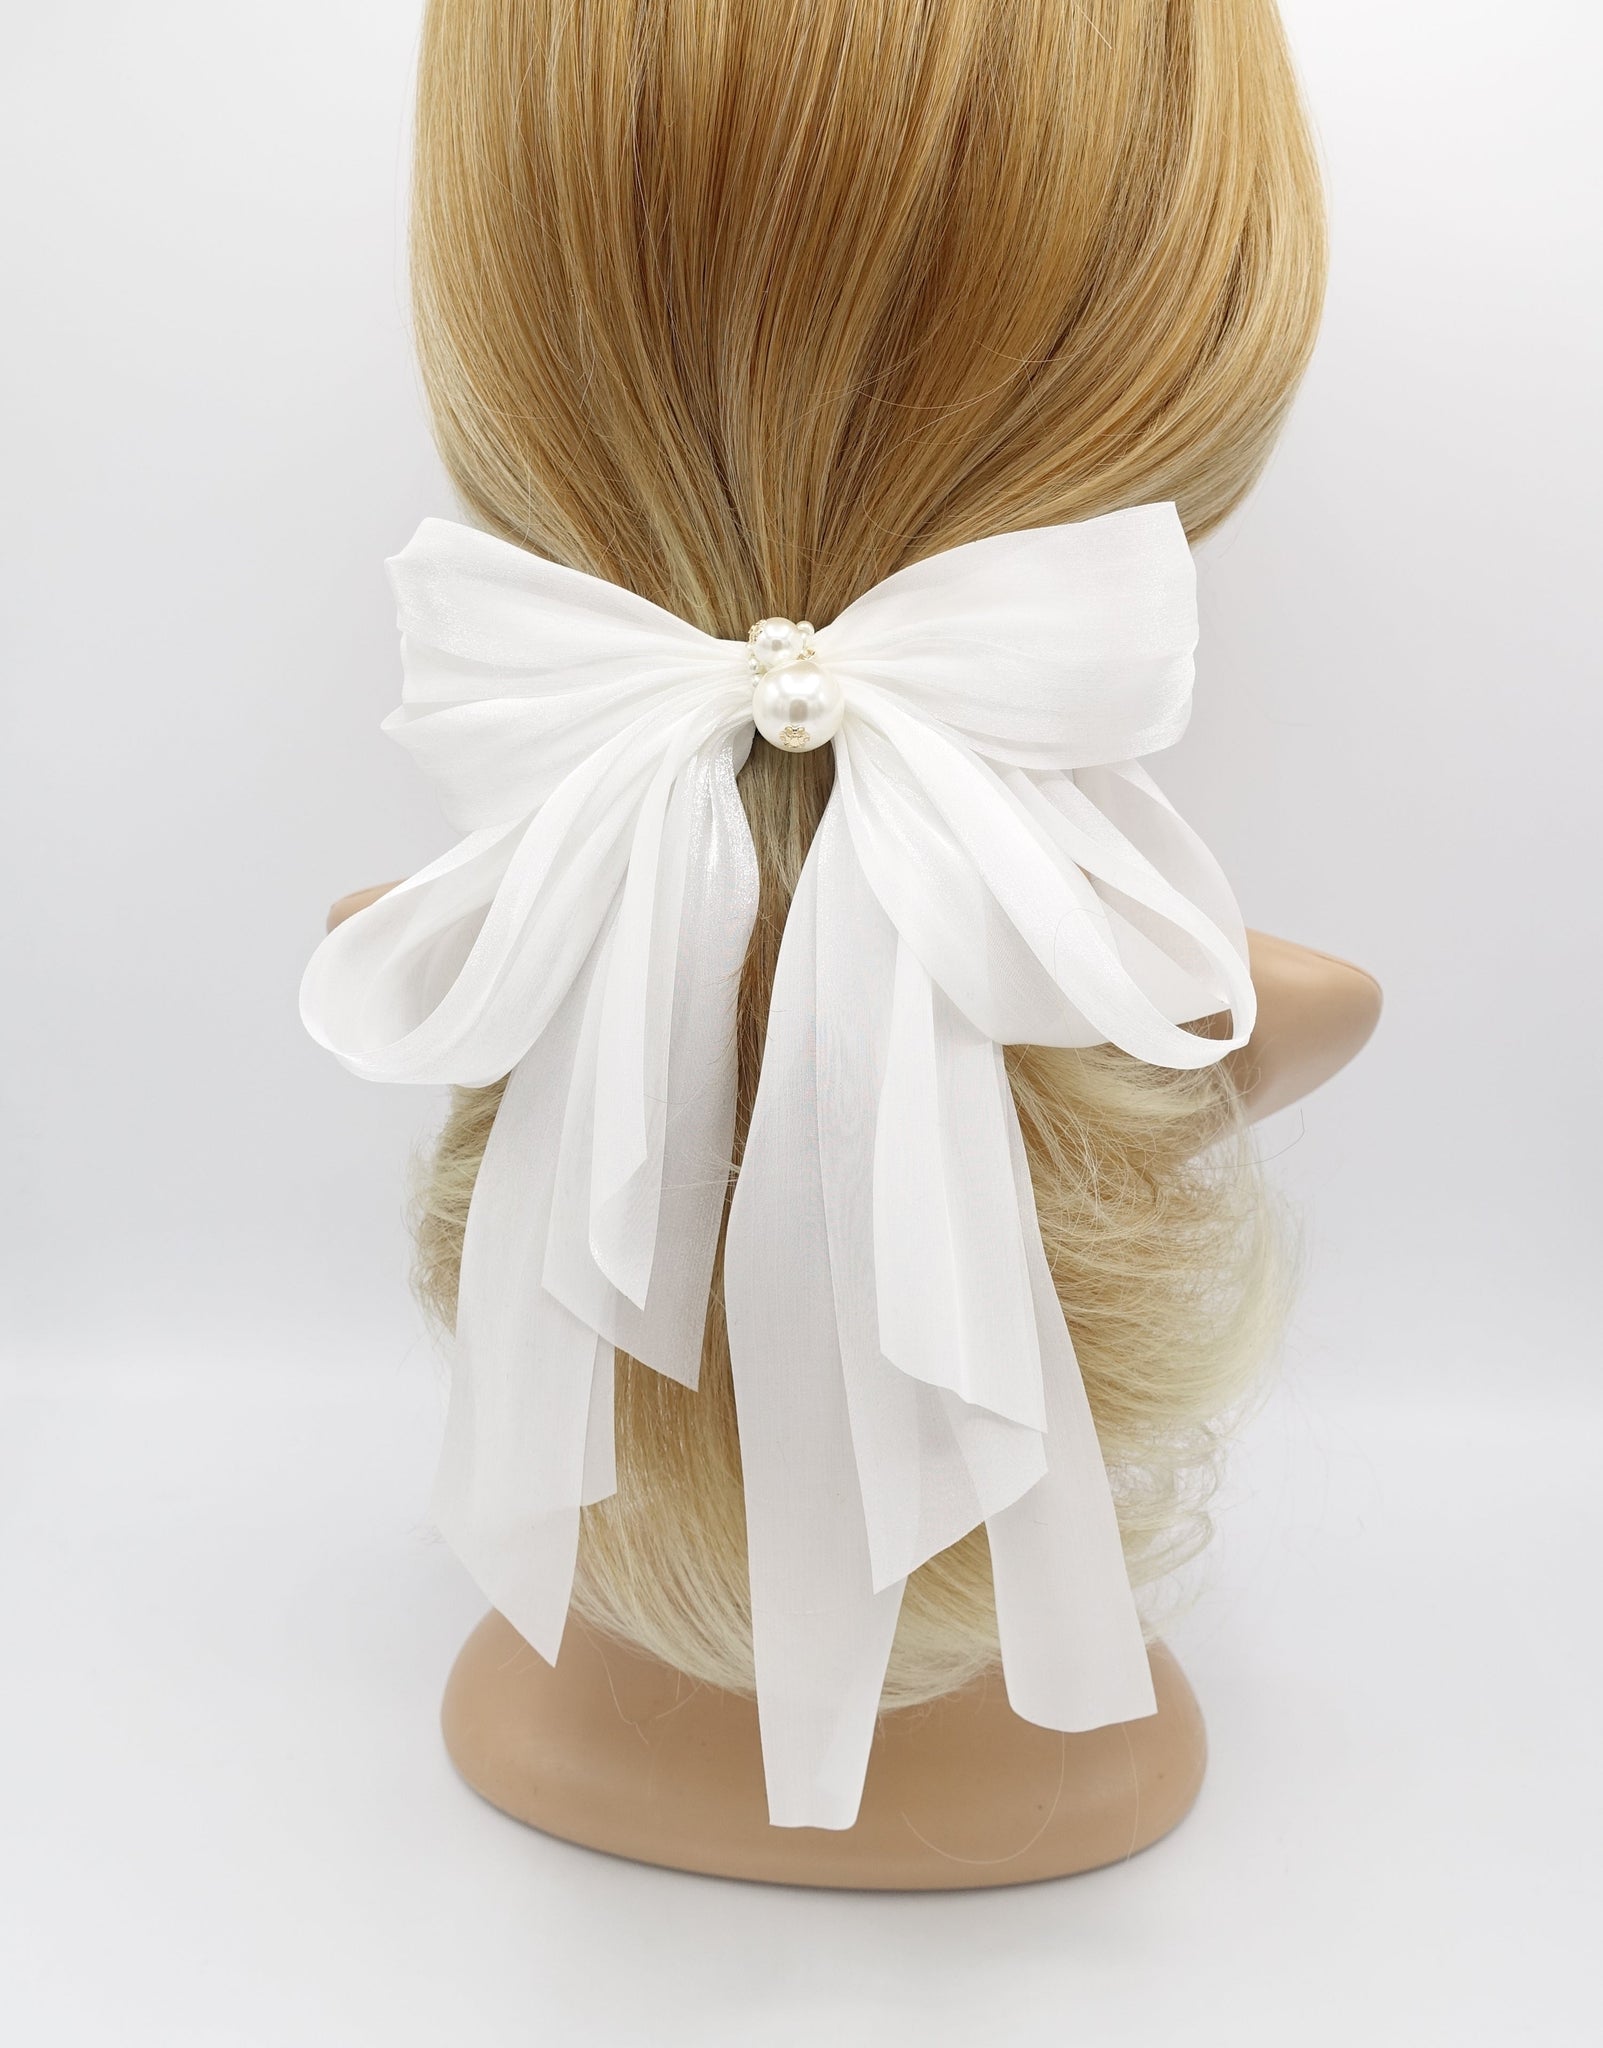 VeryShine claw/banana/barrette White organza multi layered hair bow feminine style hair accessory